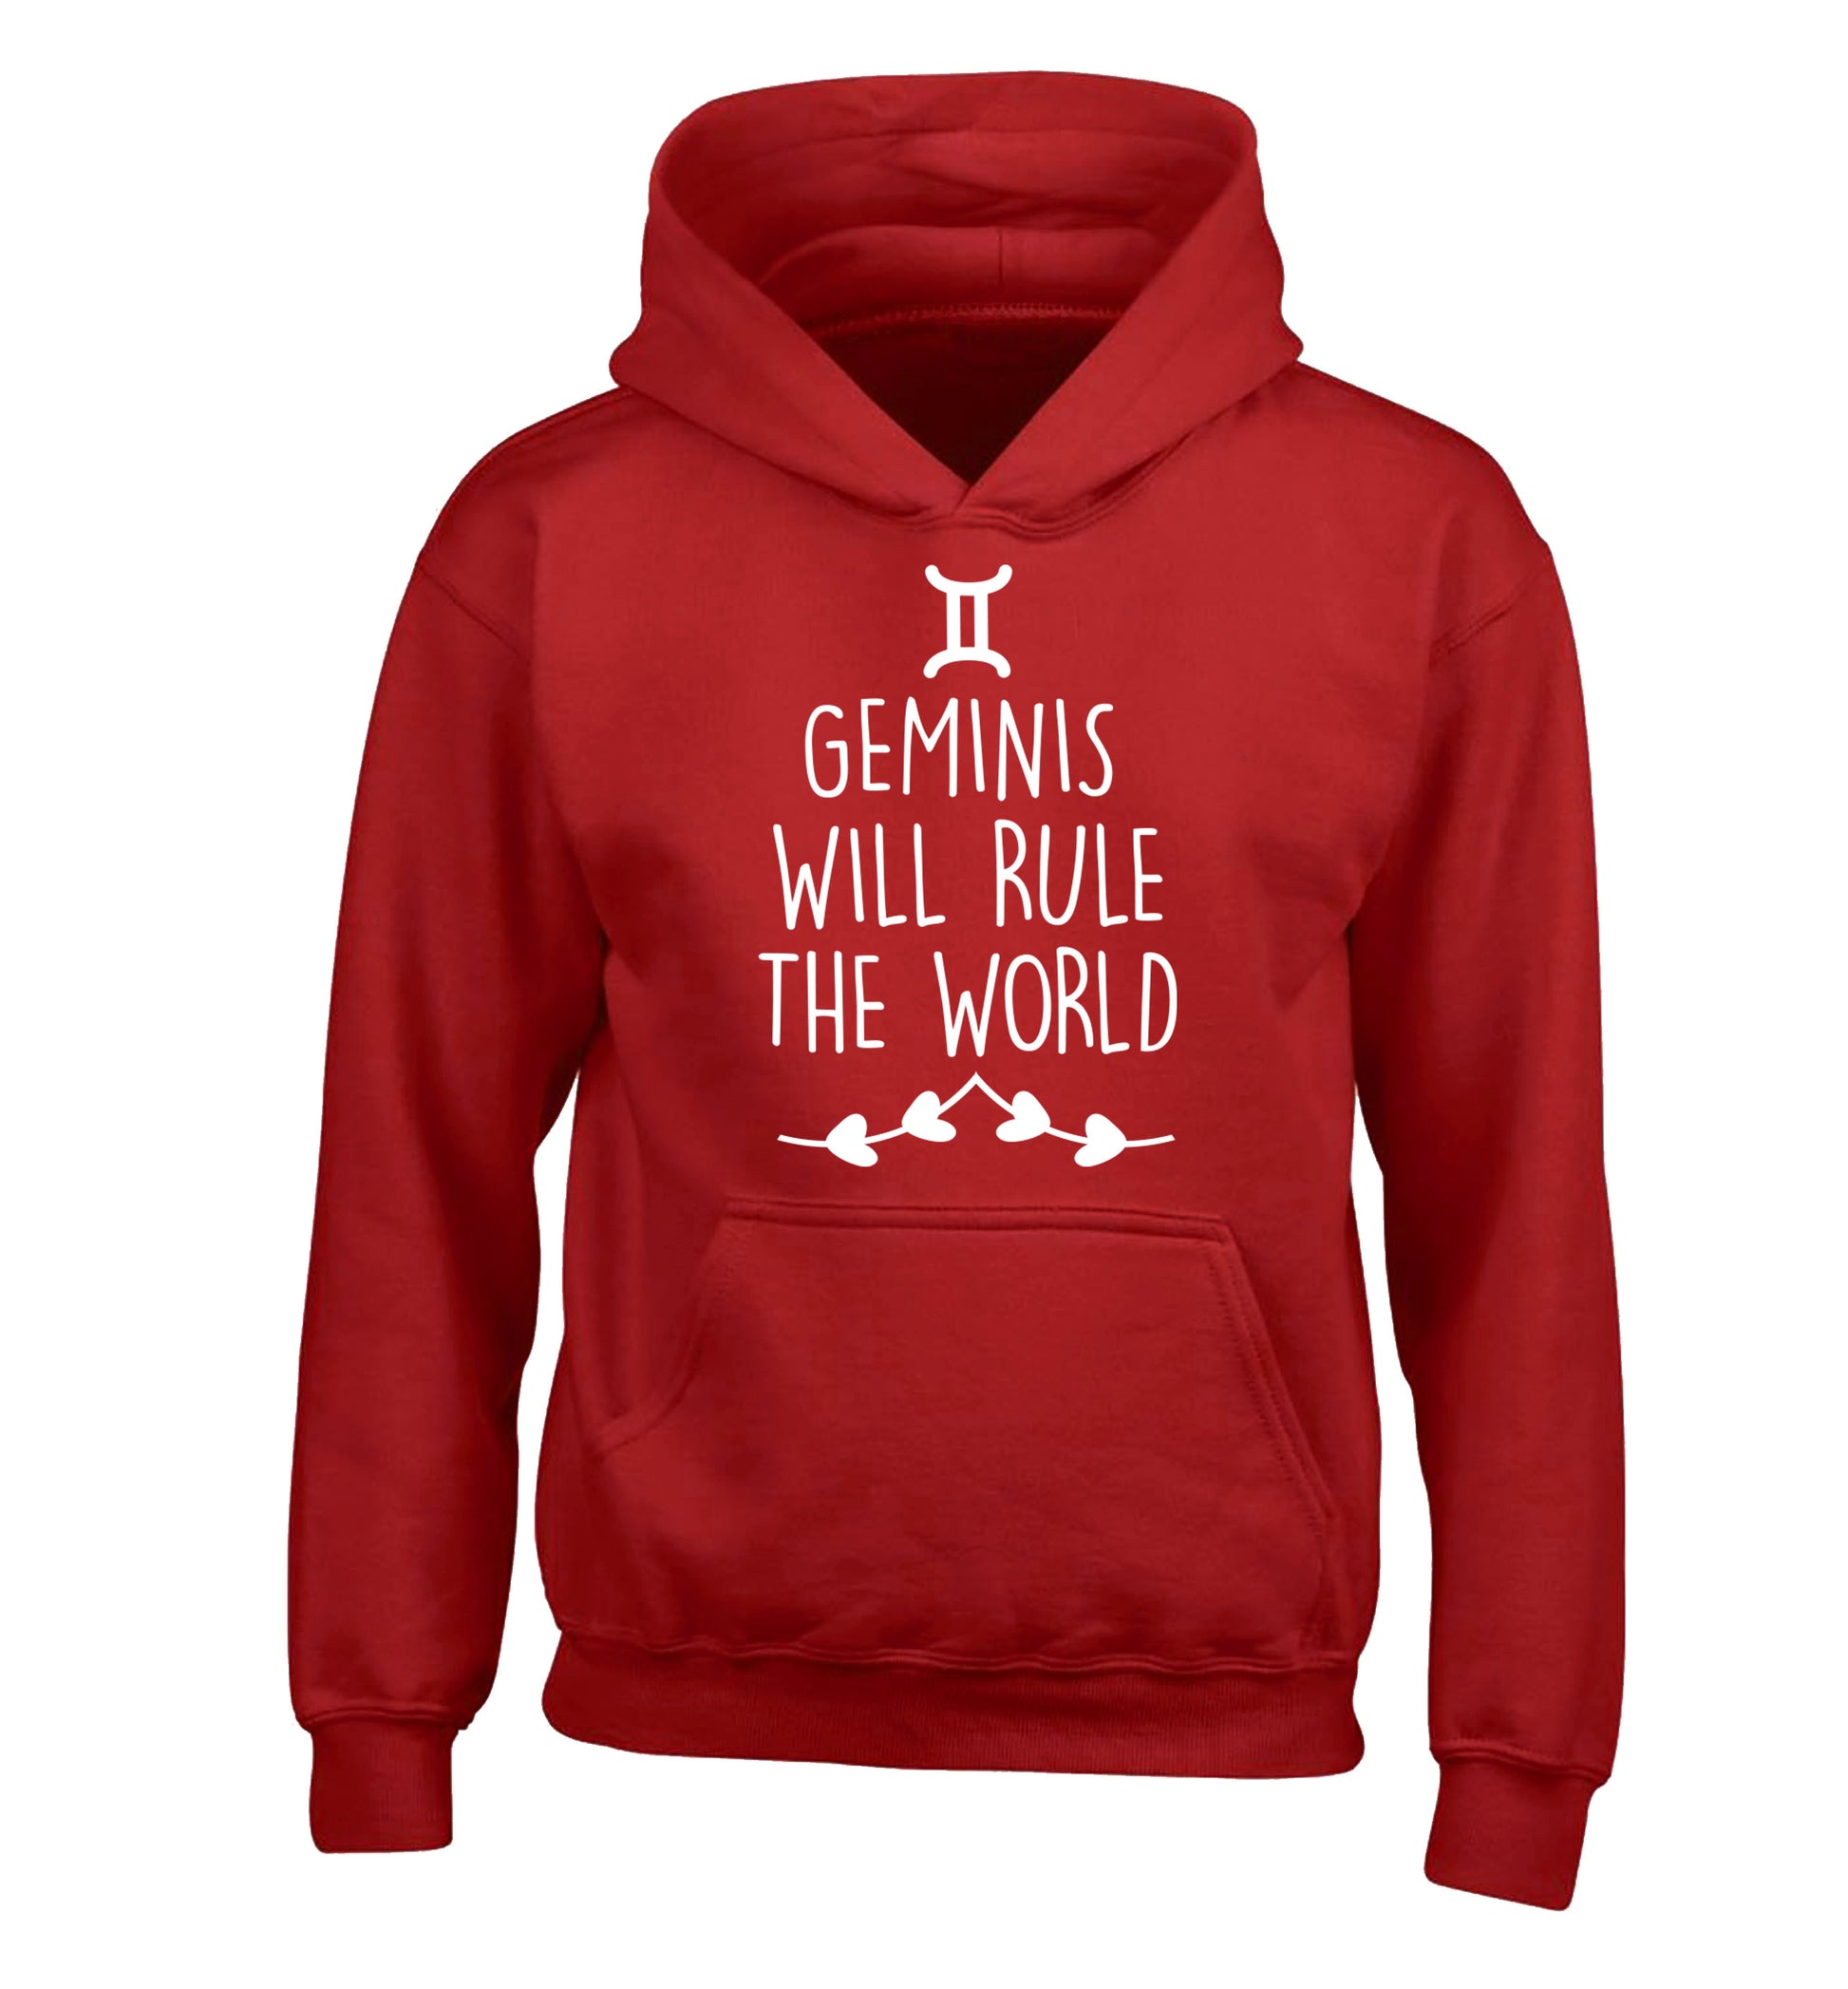 Geminis will rule the world children's red hoodie 12-13 Years